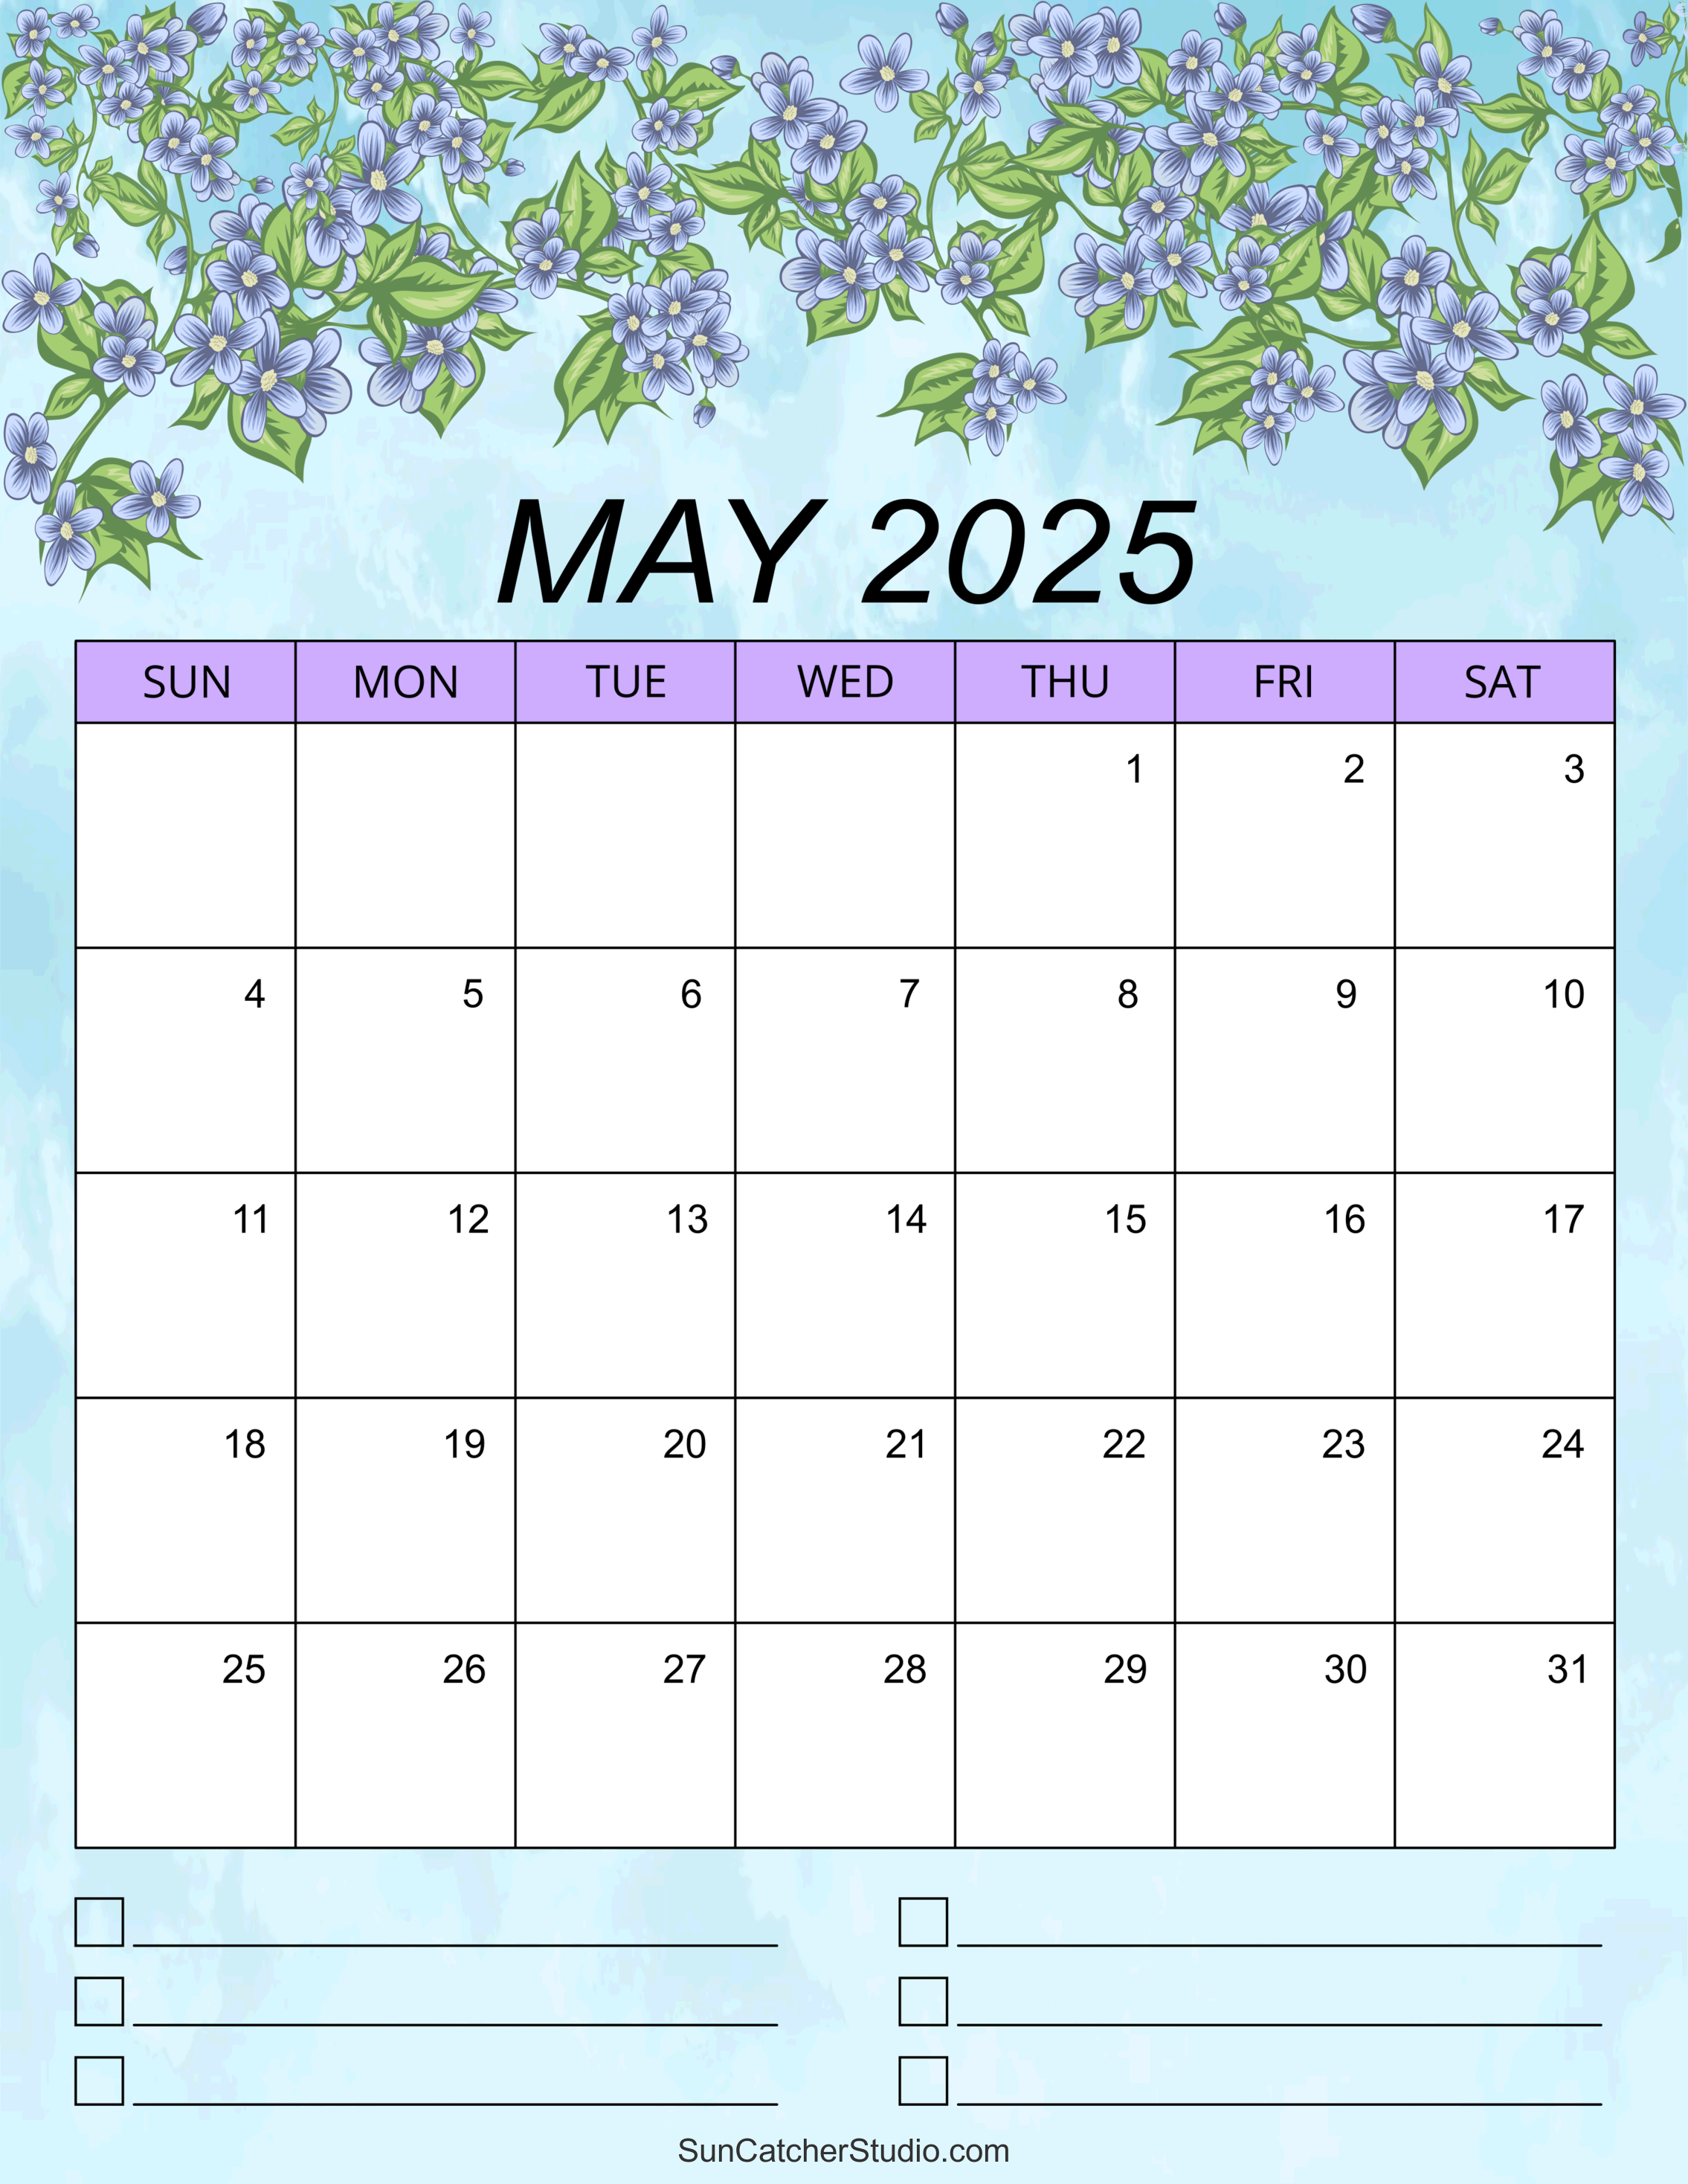 May 2025 Calendar (Free Printable) – DIY Projects, Patterns, Monograms ...